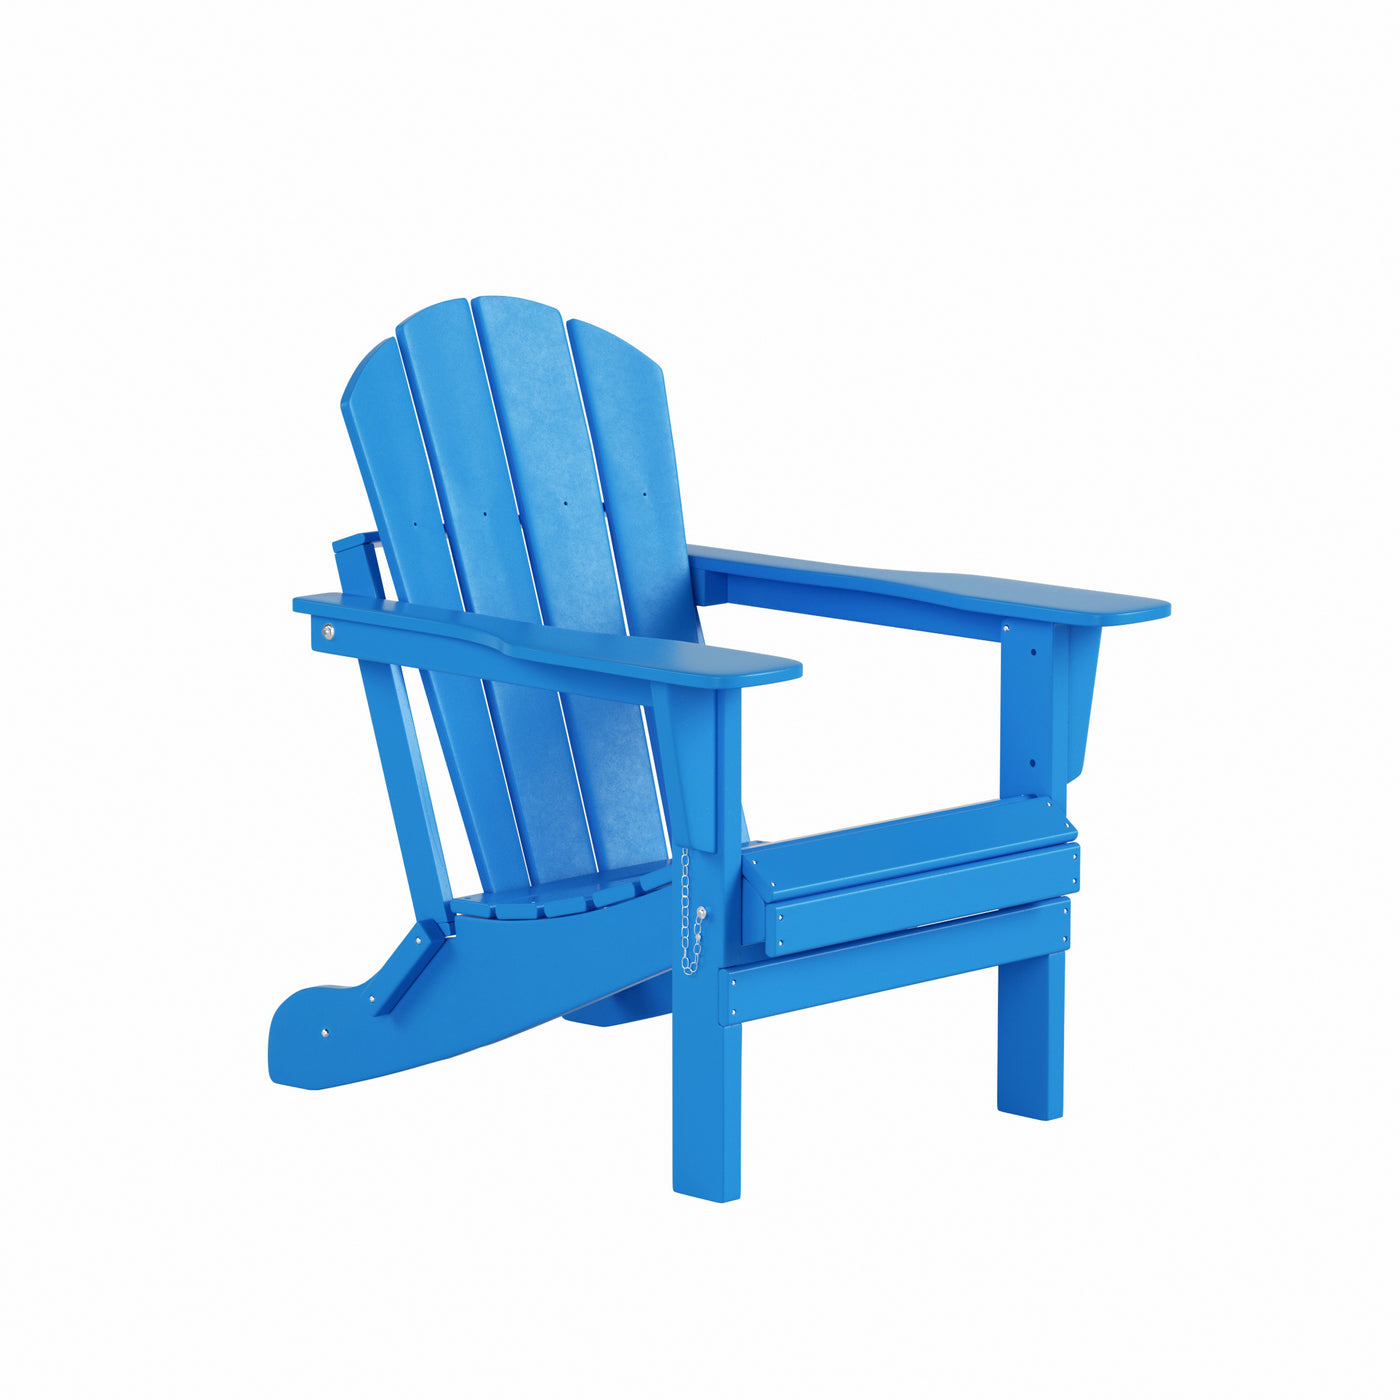 Malibu Modern Folding Poly Adirondack Chair With Square Fire Pit Table Set